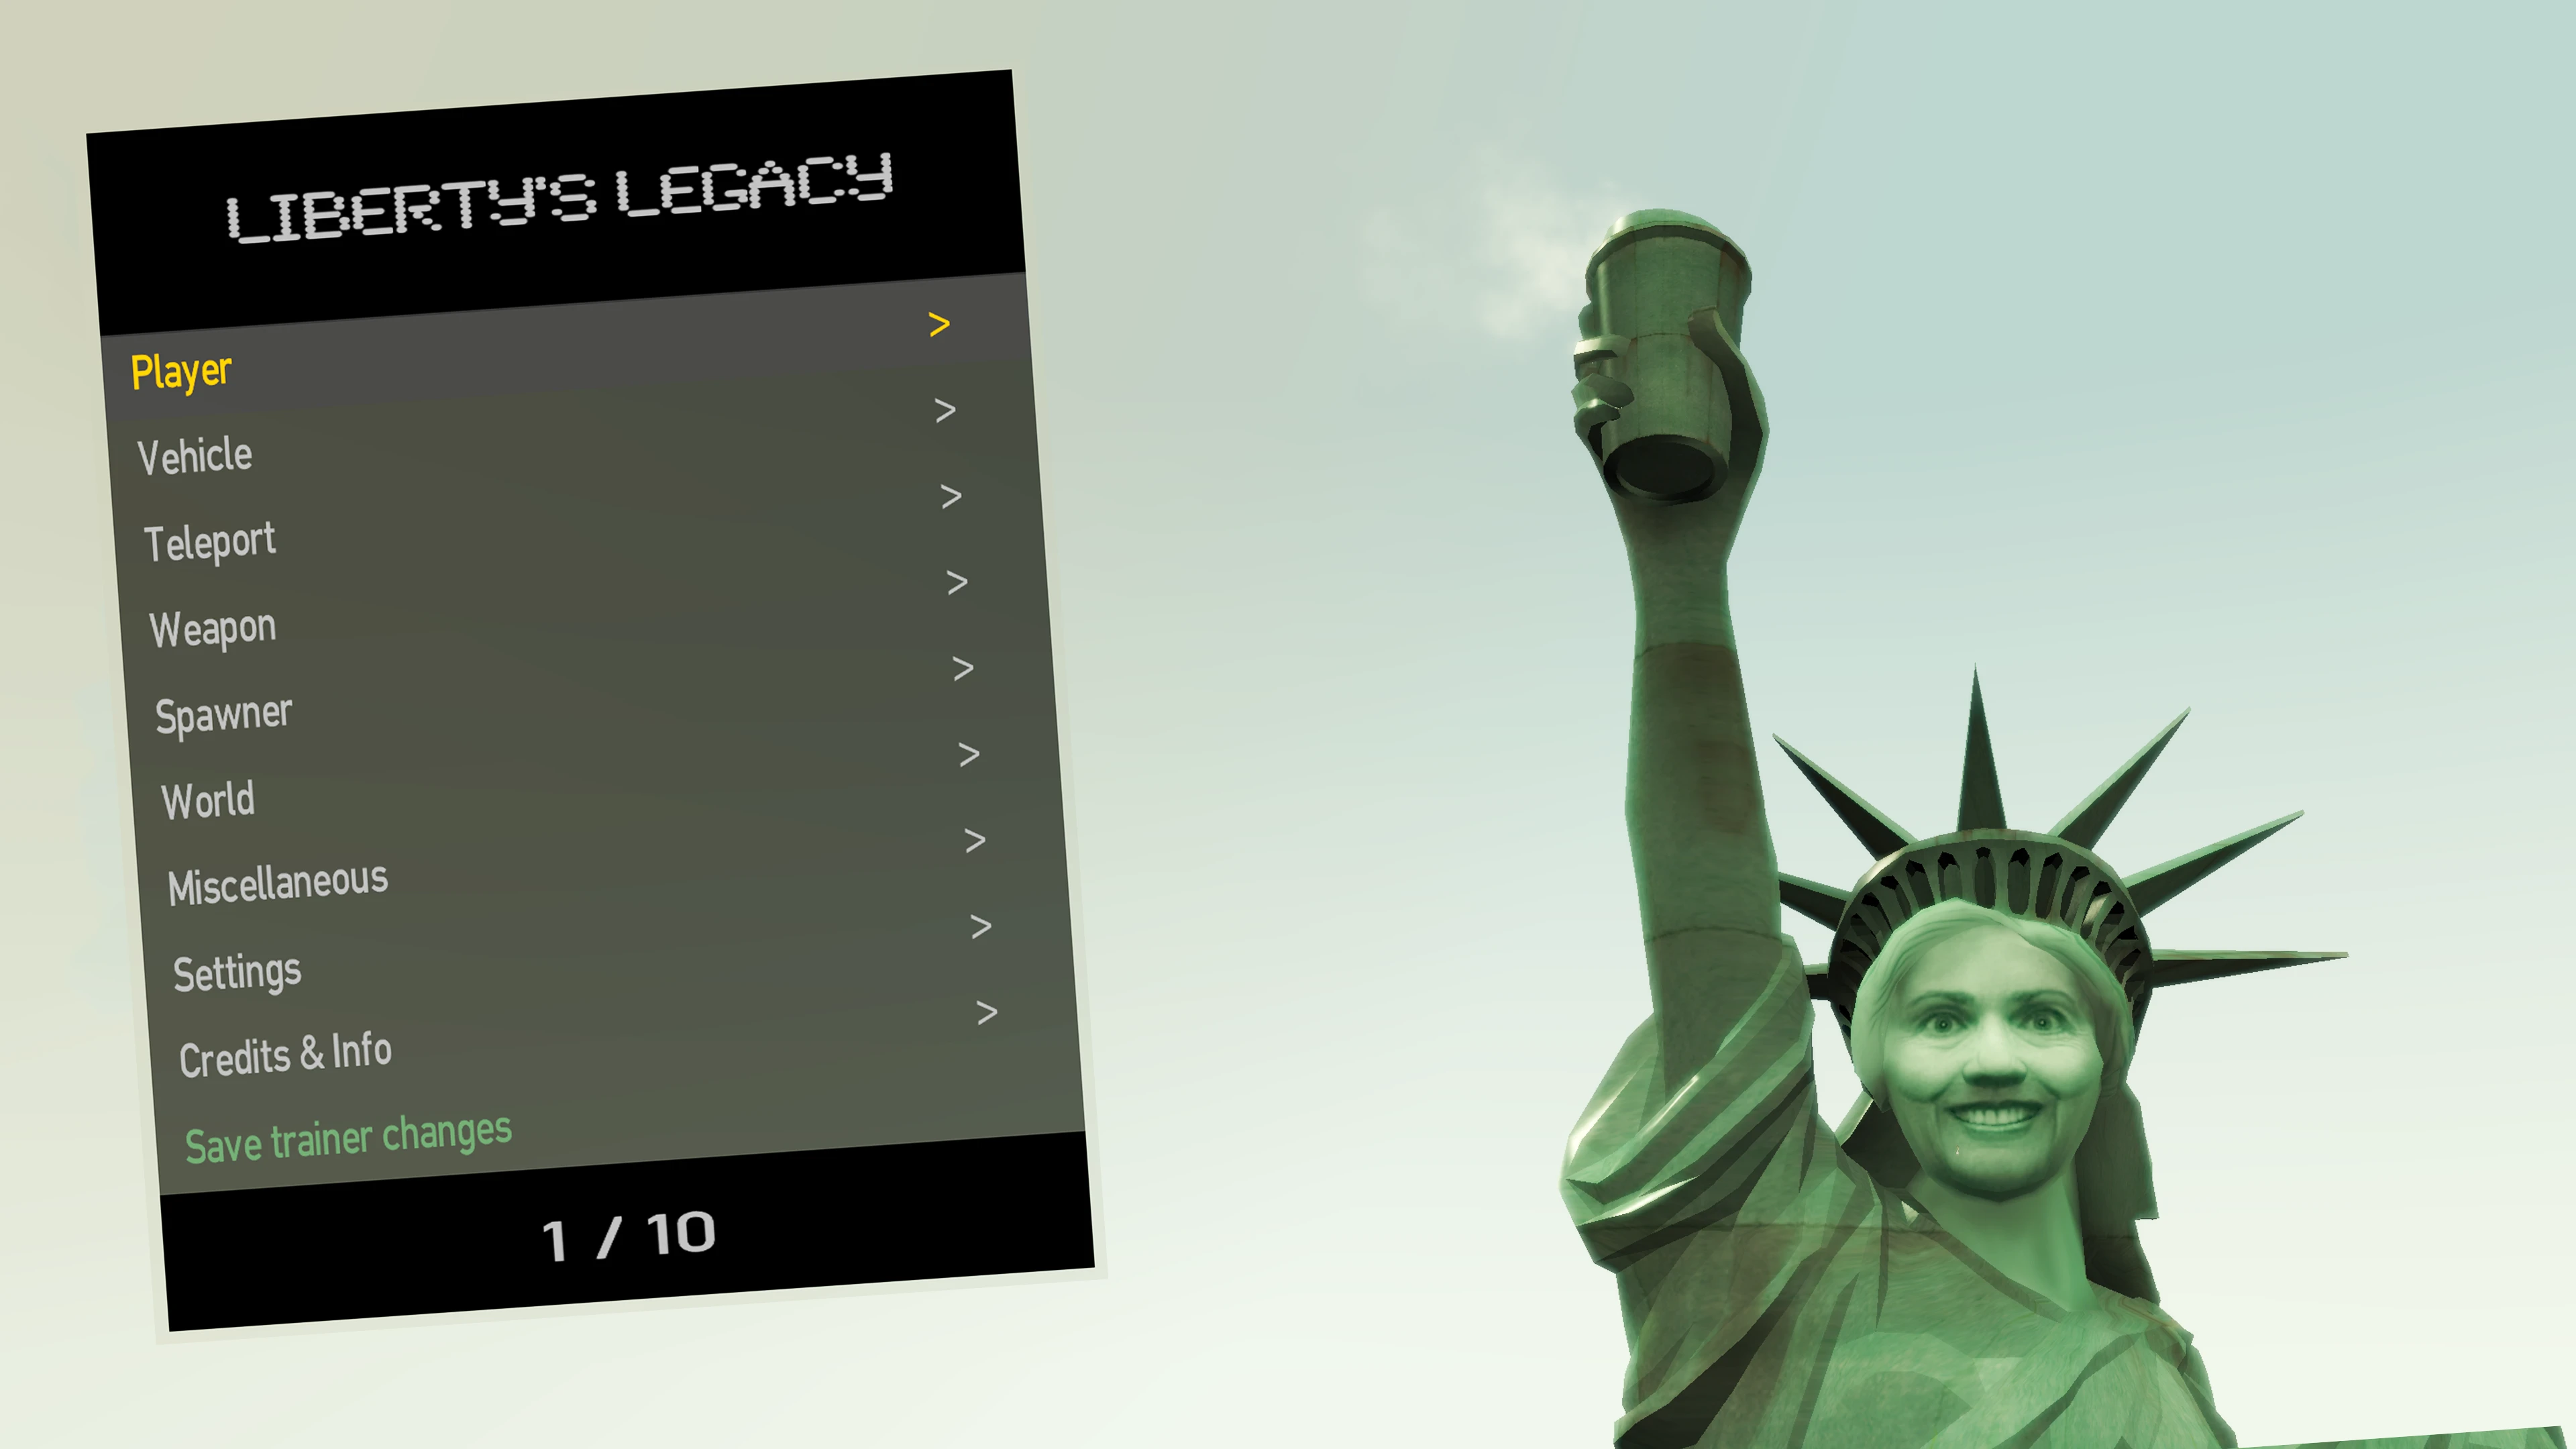 RZL-Trainer v3.1.2 - new cheat menu like GTA 5 for GTA San Andreas